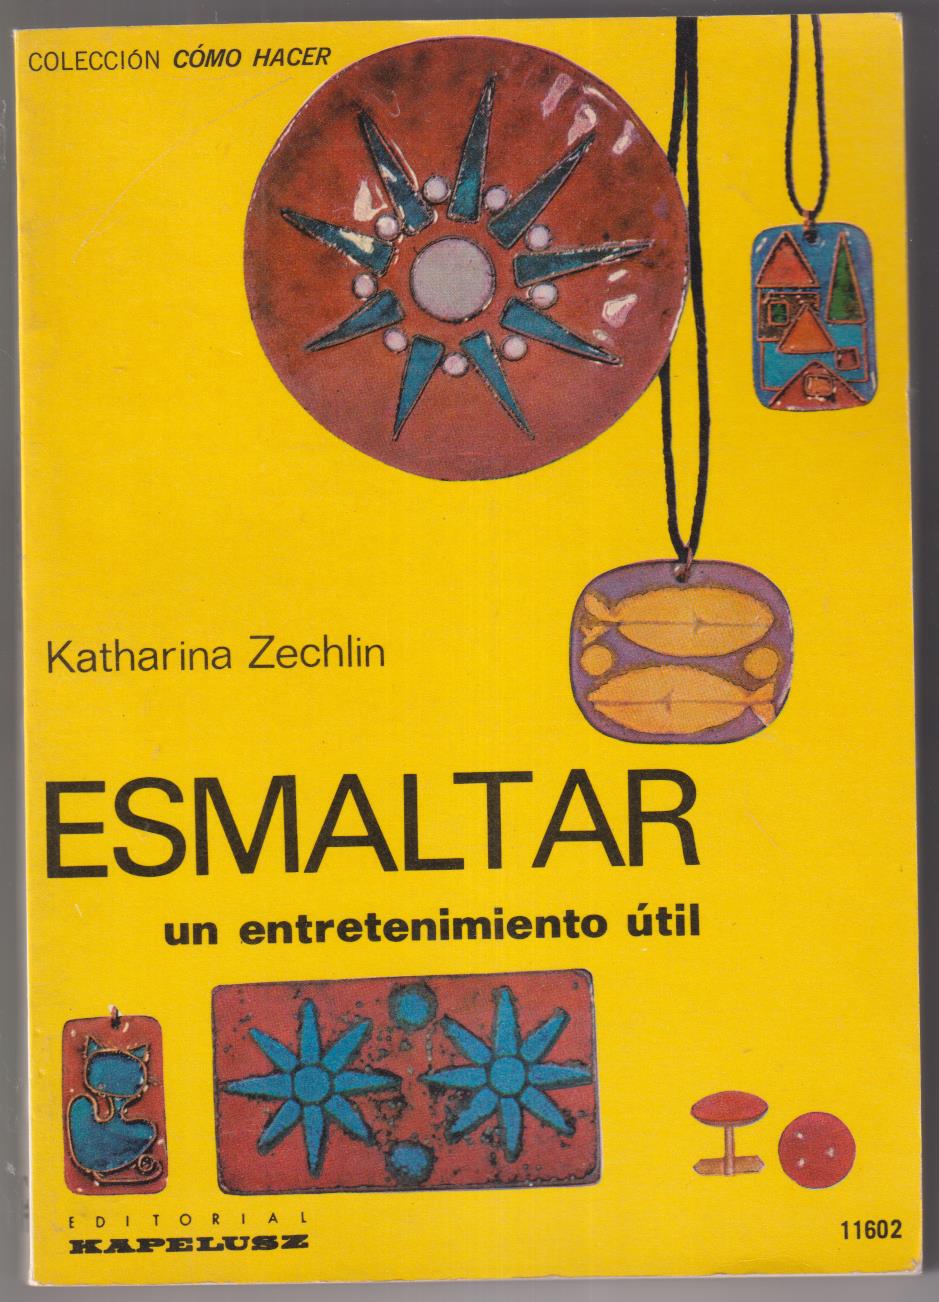 Colección Cómo hacer. Katharina Zechlin. Esmaltar un entretenimiento útil. Argentina 1969